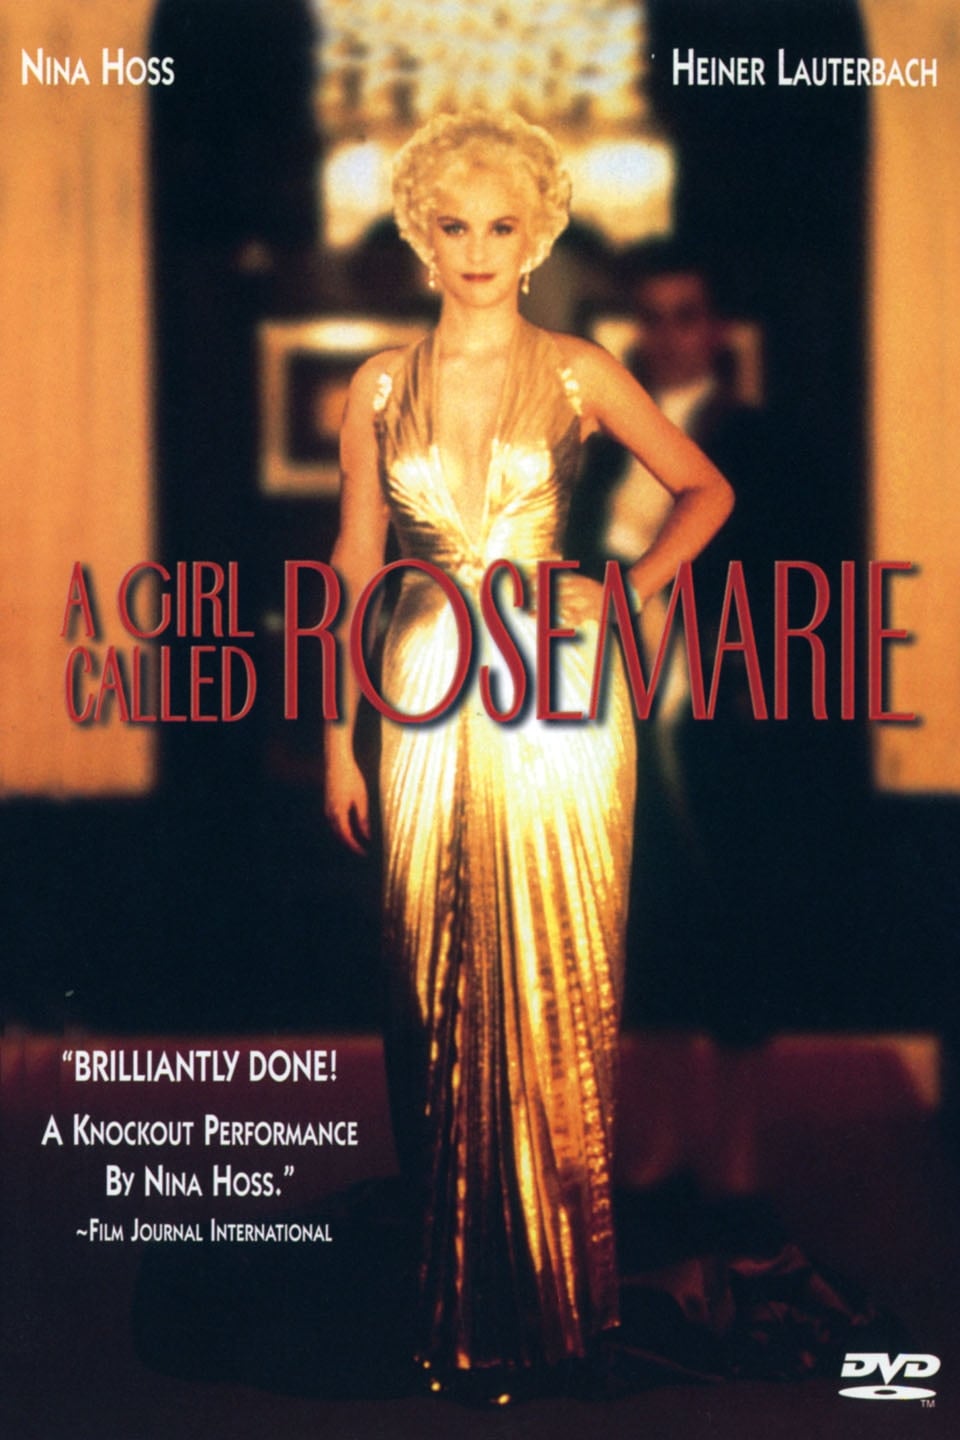 A Girl Called Rosemarie (1996)